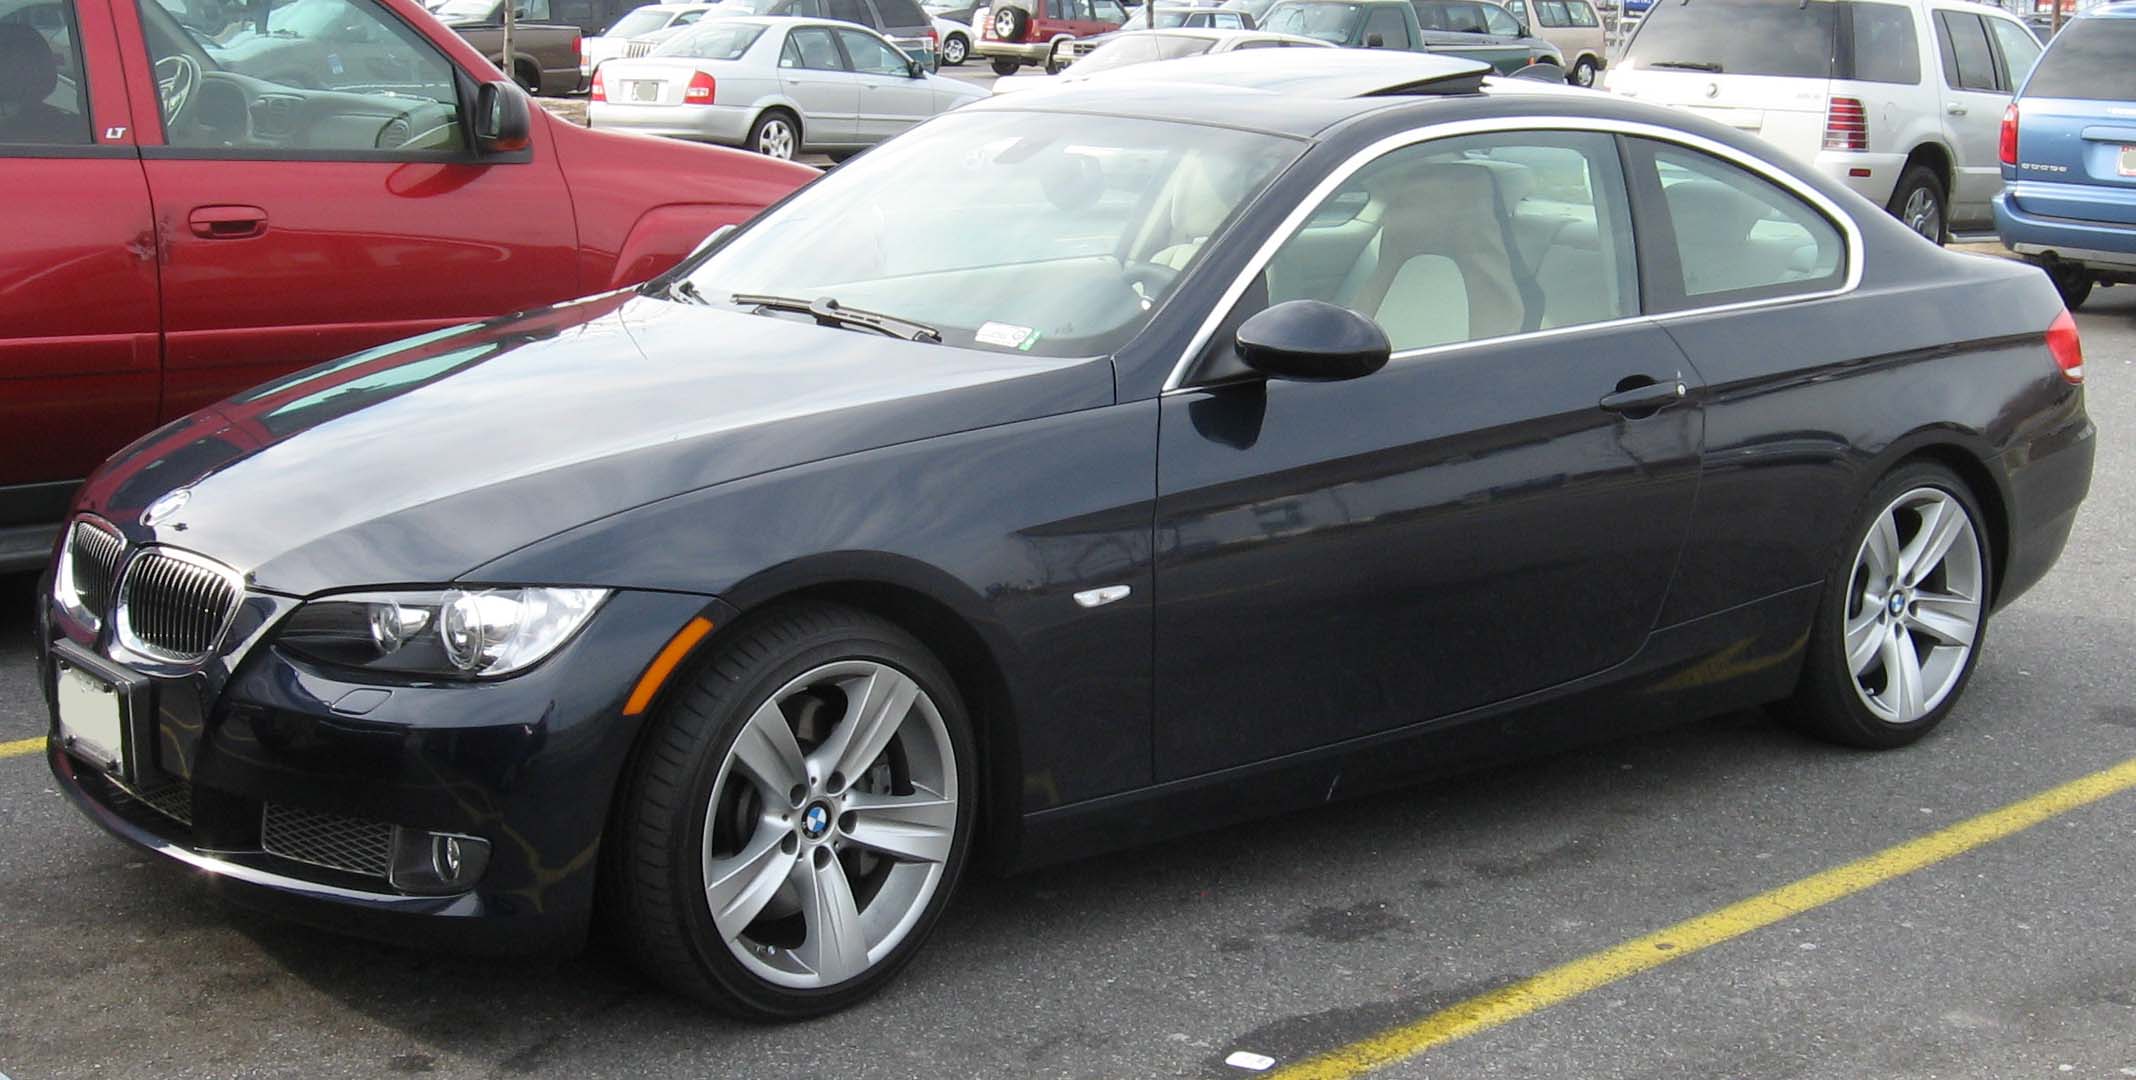 File:2007-BMW-335i-coupe.jpg - Wikimedia Commons